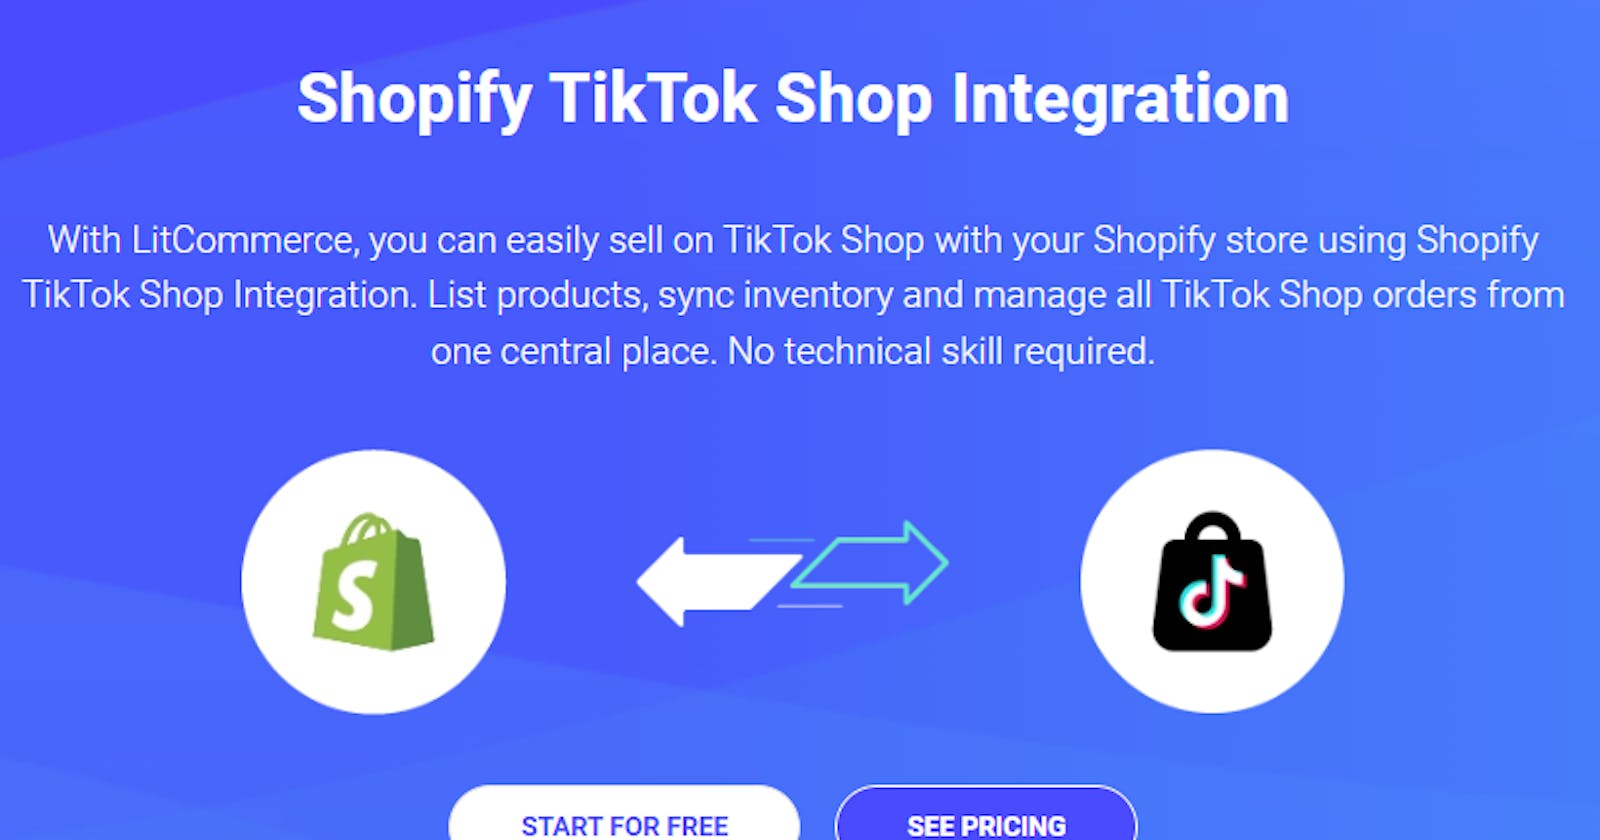 Introducing LitCommerce's Shopify TikTok Shop Integration